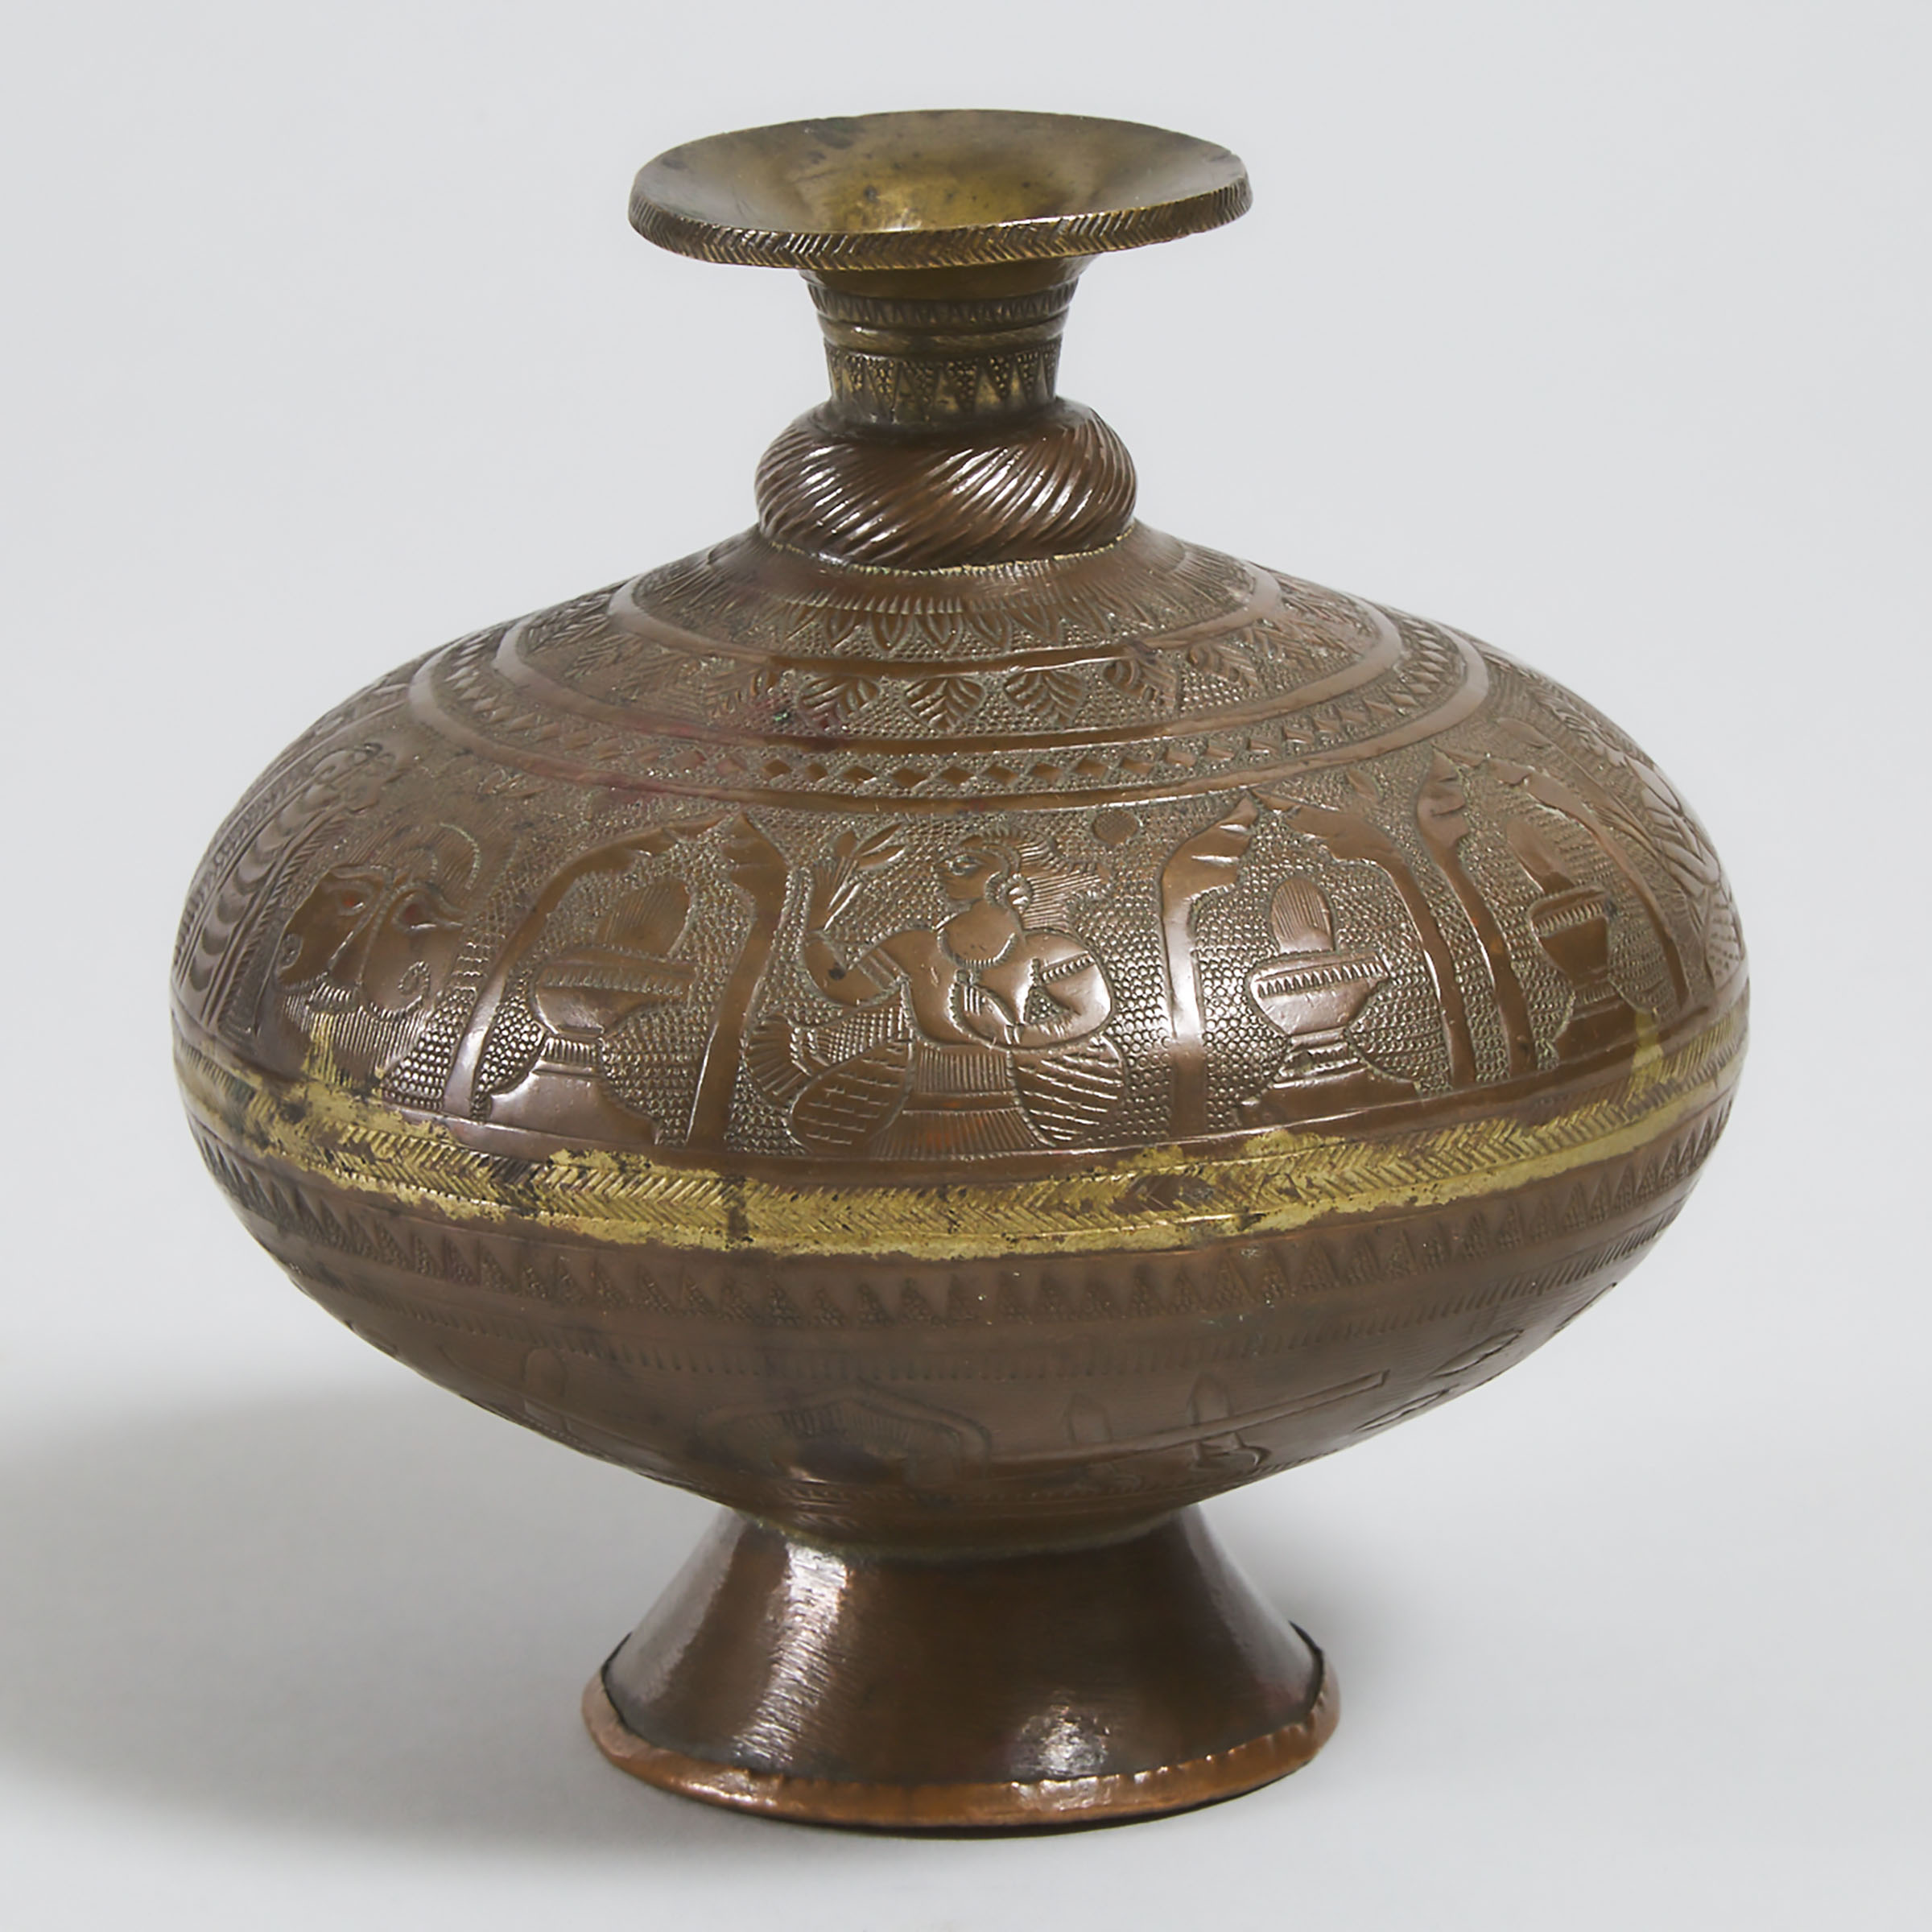 Indian Brass and Copper Hindu Chambu Lota, Benares or Rajasthan, 18th/19th century